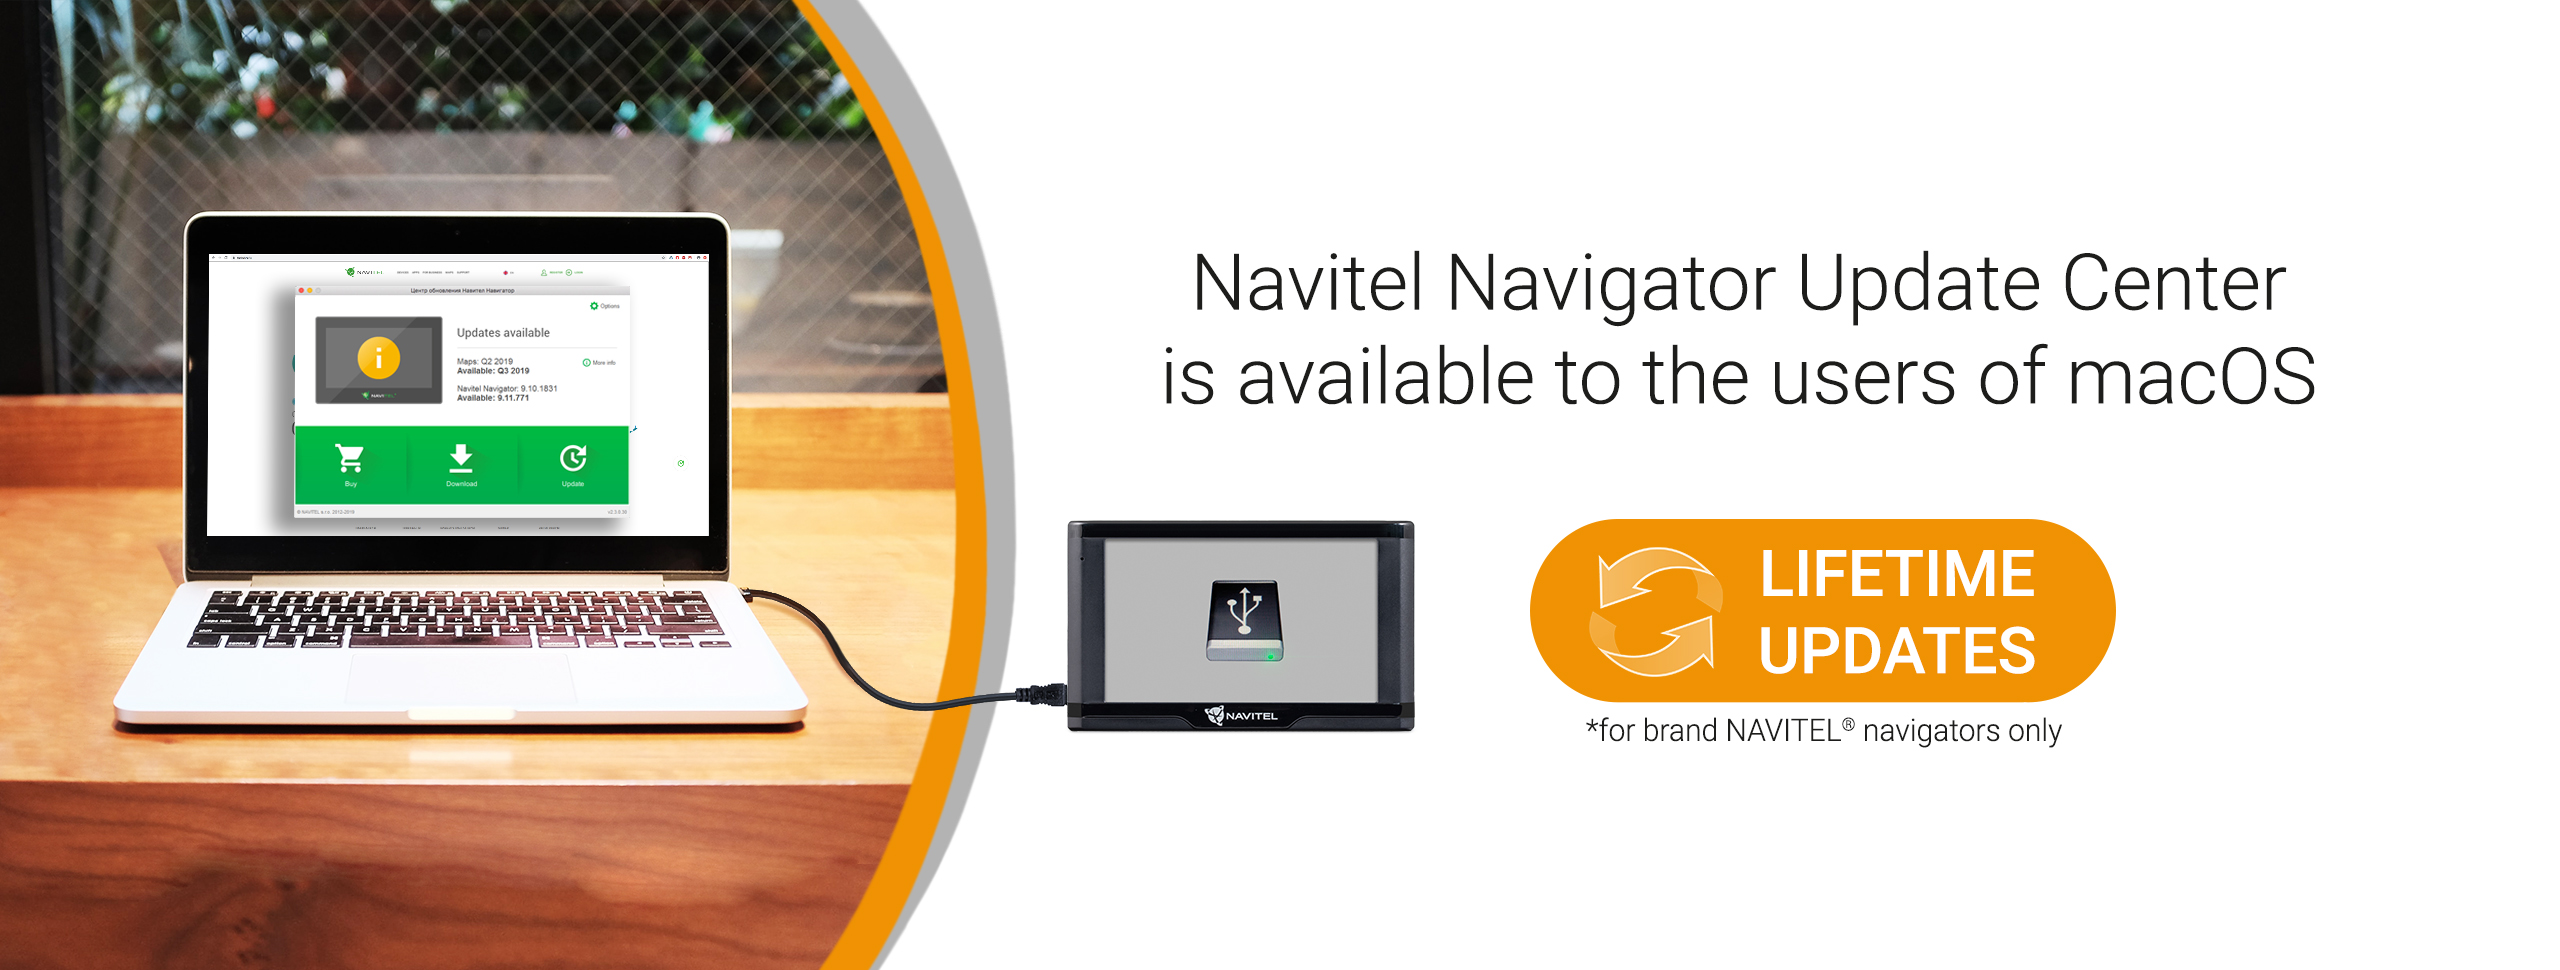 Navitel Navigator Update Center to the users of macOS